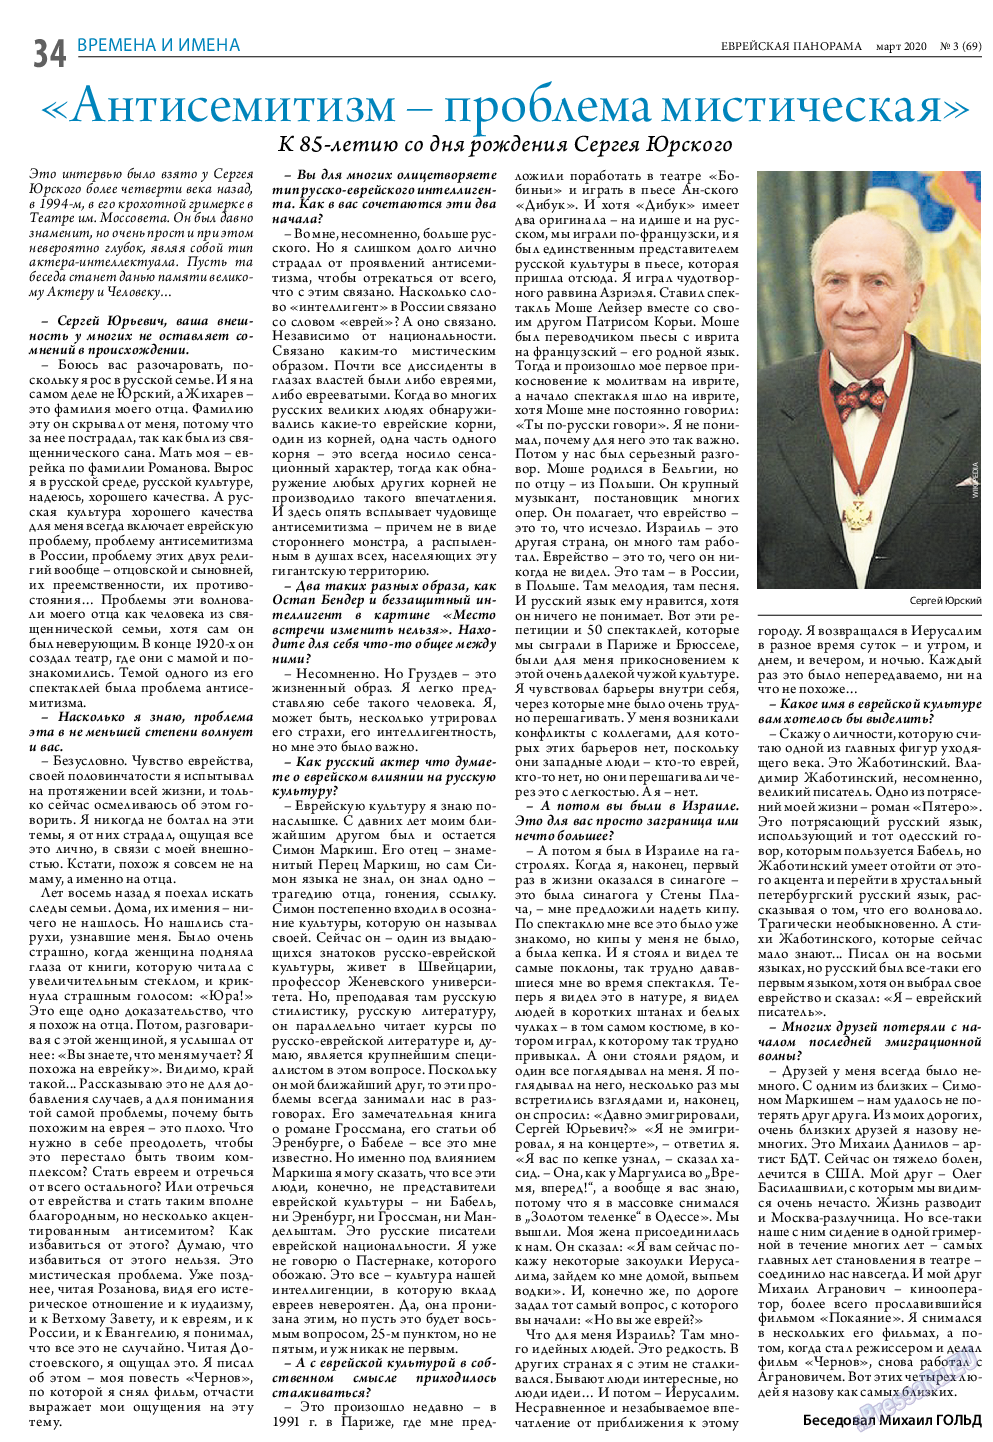 Еврейская панорама, газета. 2020 №3 стр.34